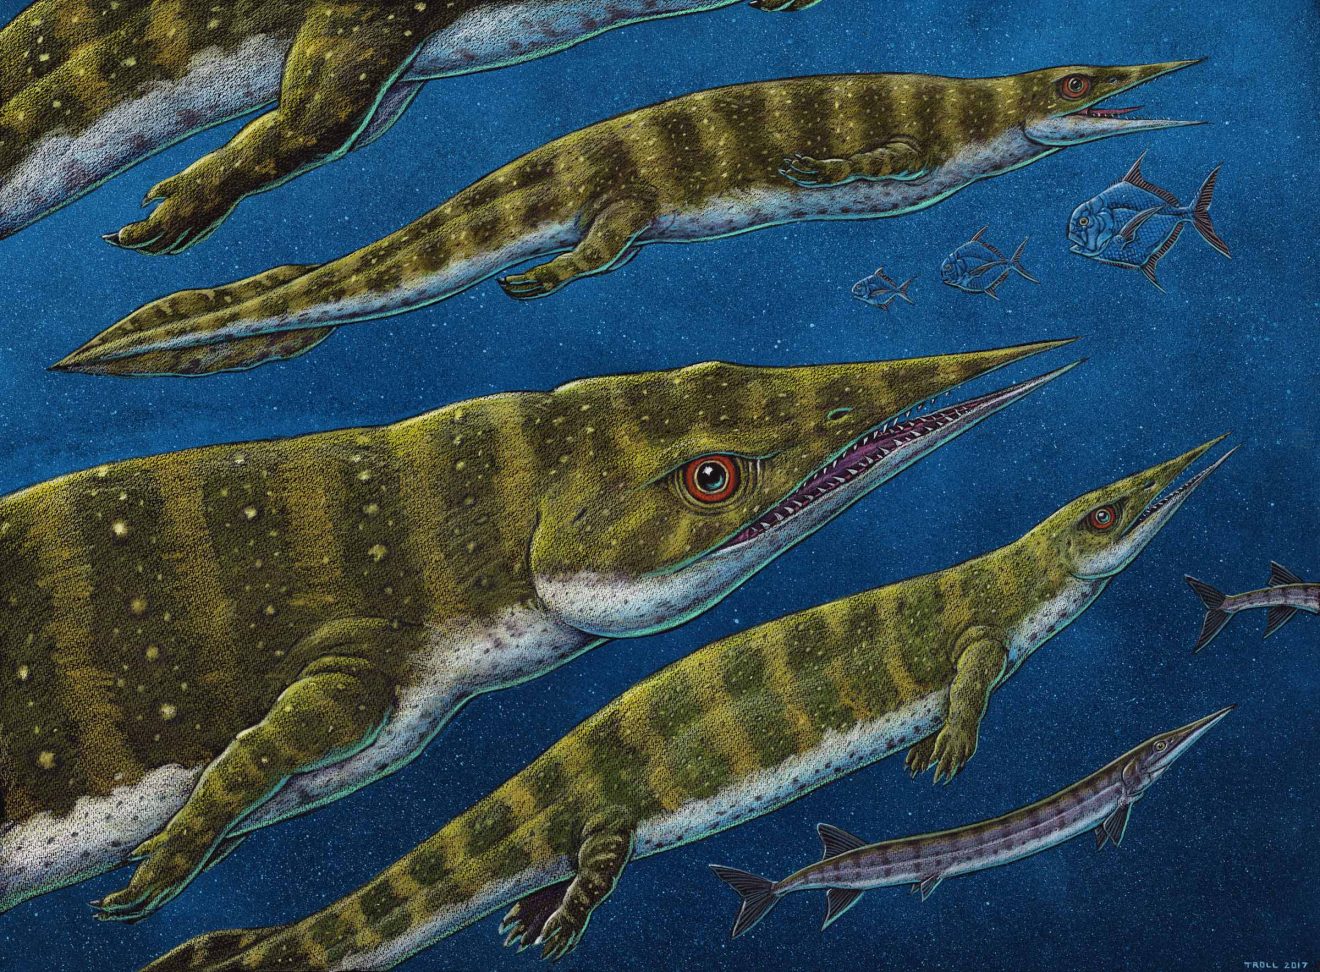 New thalattosaur species discovered in Southeast Alaska